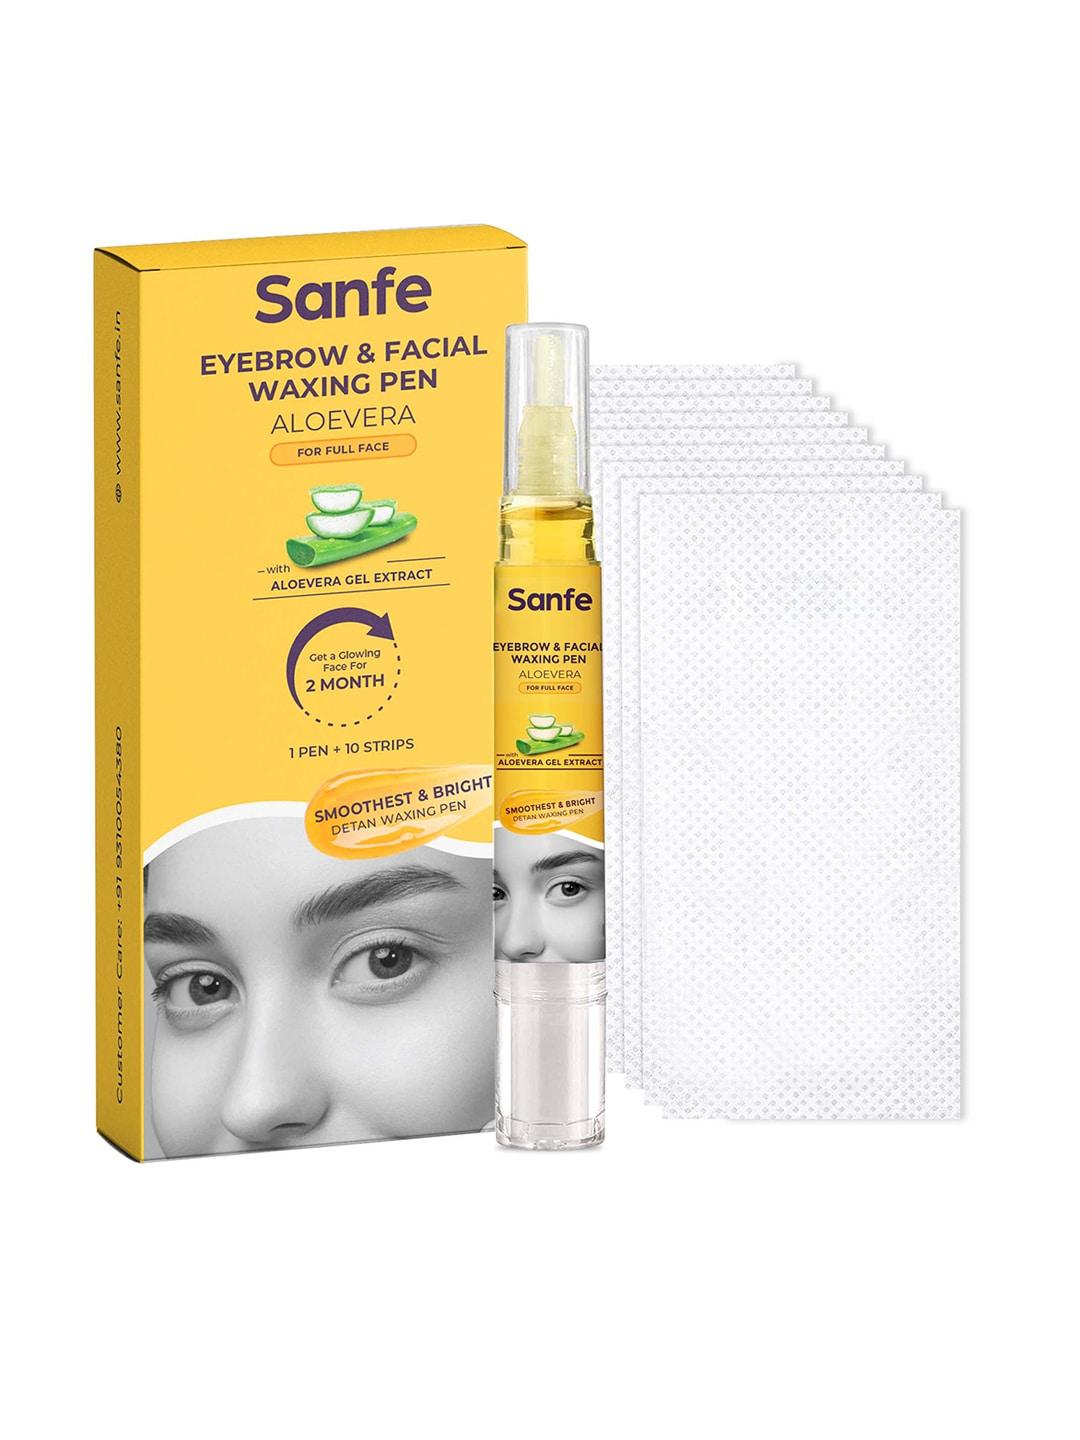 Sanfe Aloevera Eyebrow & Facial Detan Waxing Pen 5ml with 10 Waxing Strips